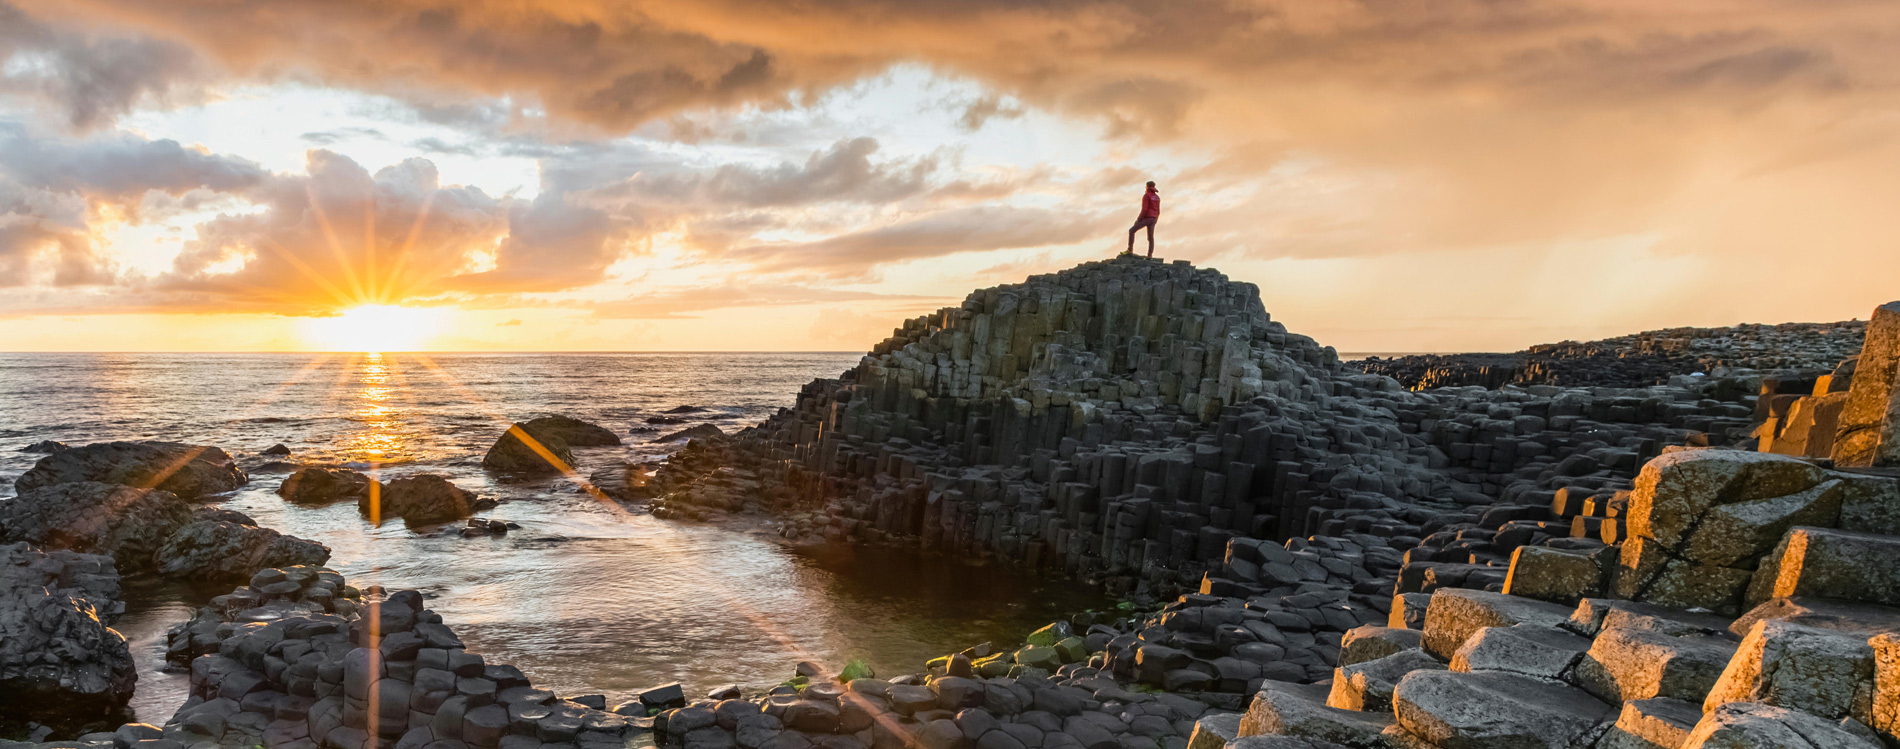 9 worthwhile activities to do on the island of Ireland